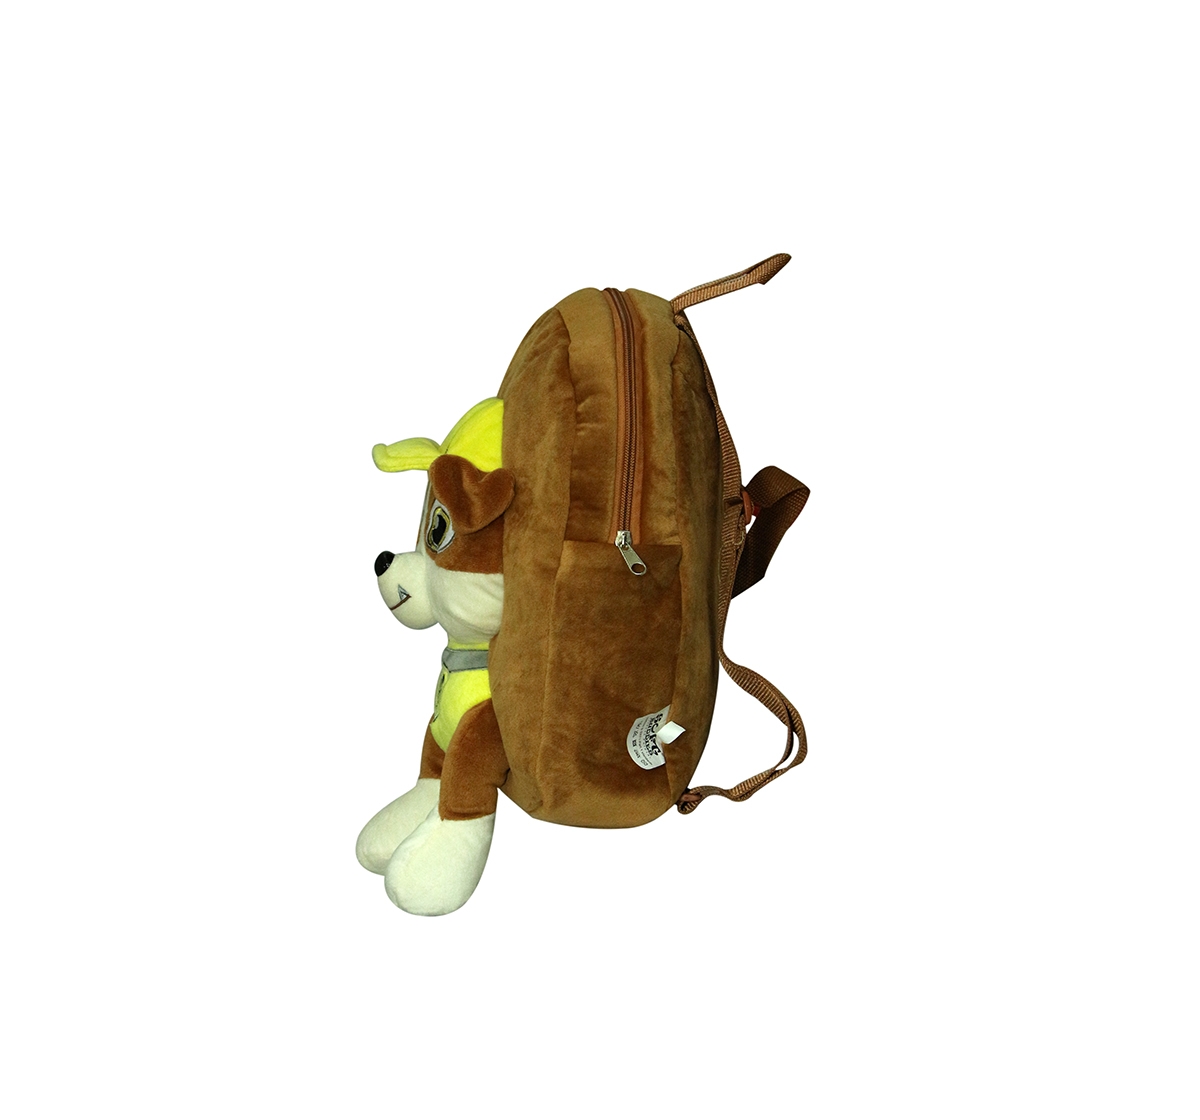 Paw Patrol | Paw Patrol Toy On Bag  Rubble Plush Accessories for Kids age 12M+ - 30.48 Cm  2